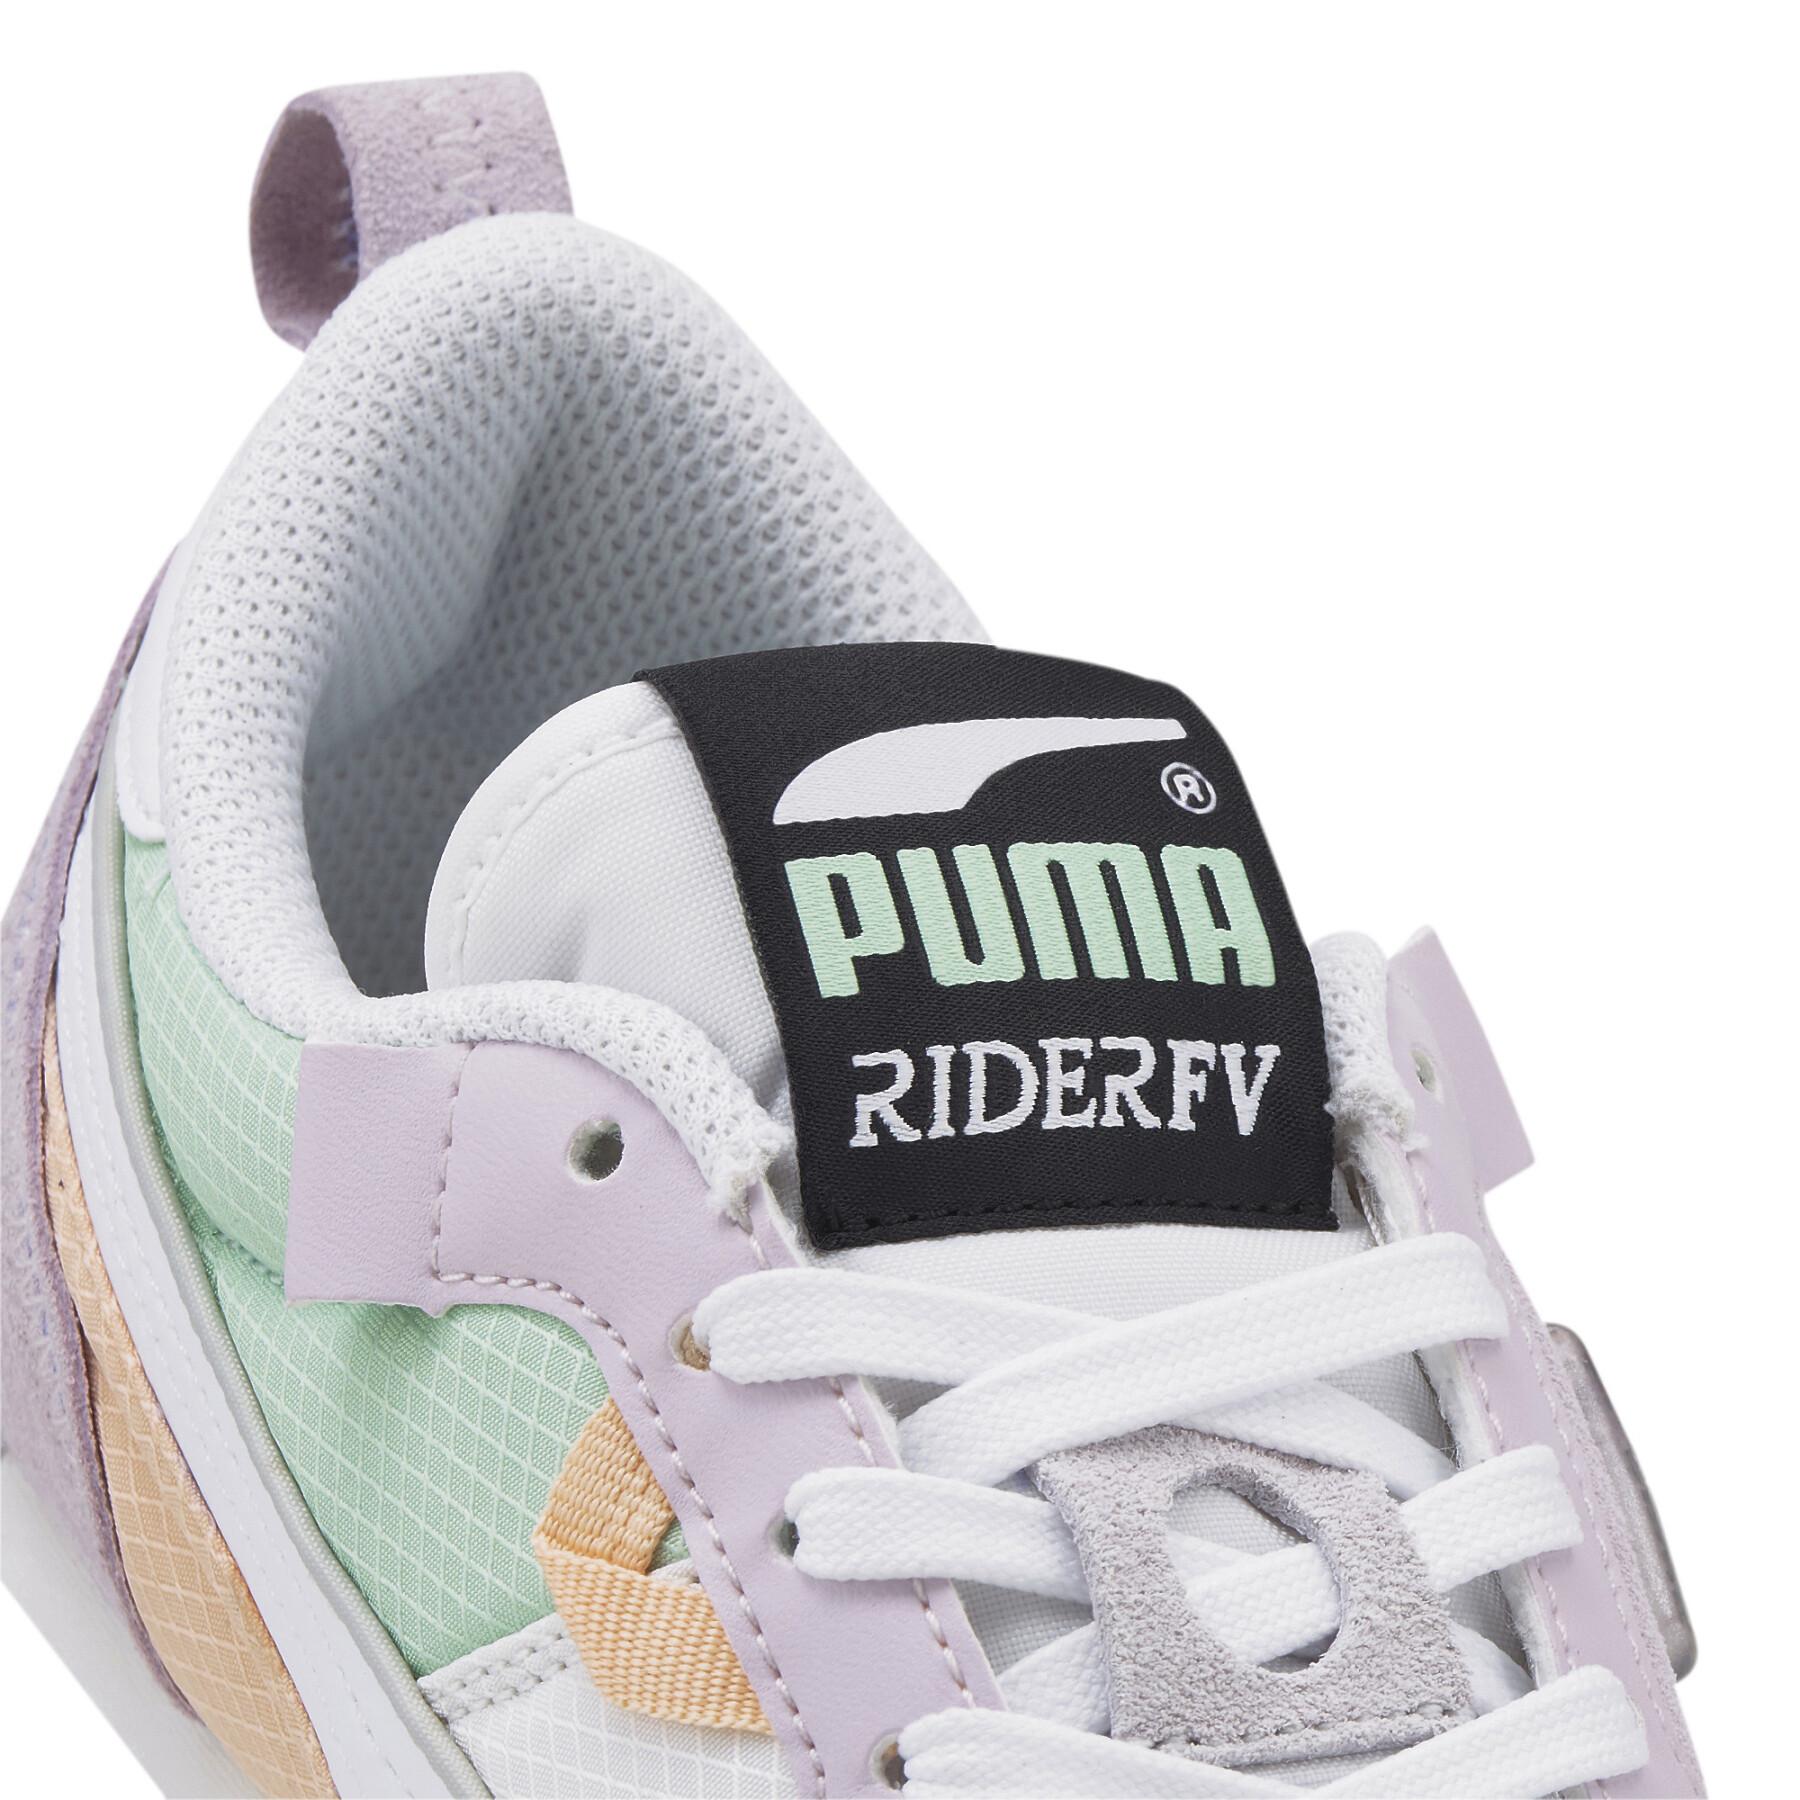 Baskets femme Puma Rider Fv Futurev